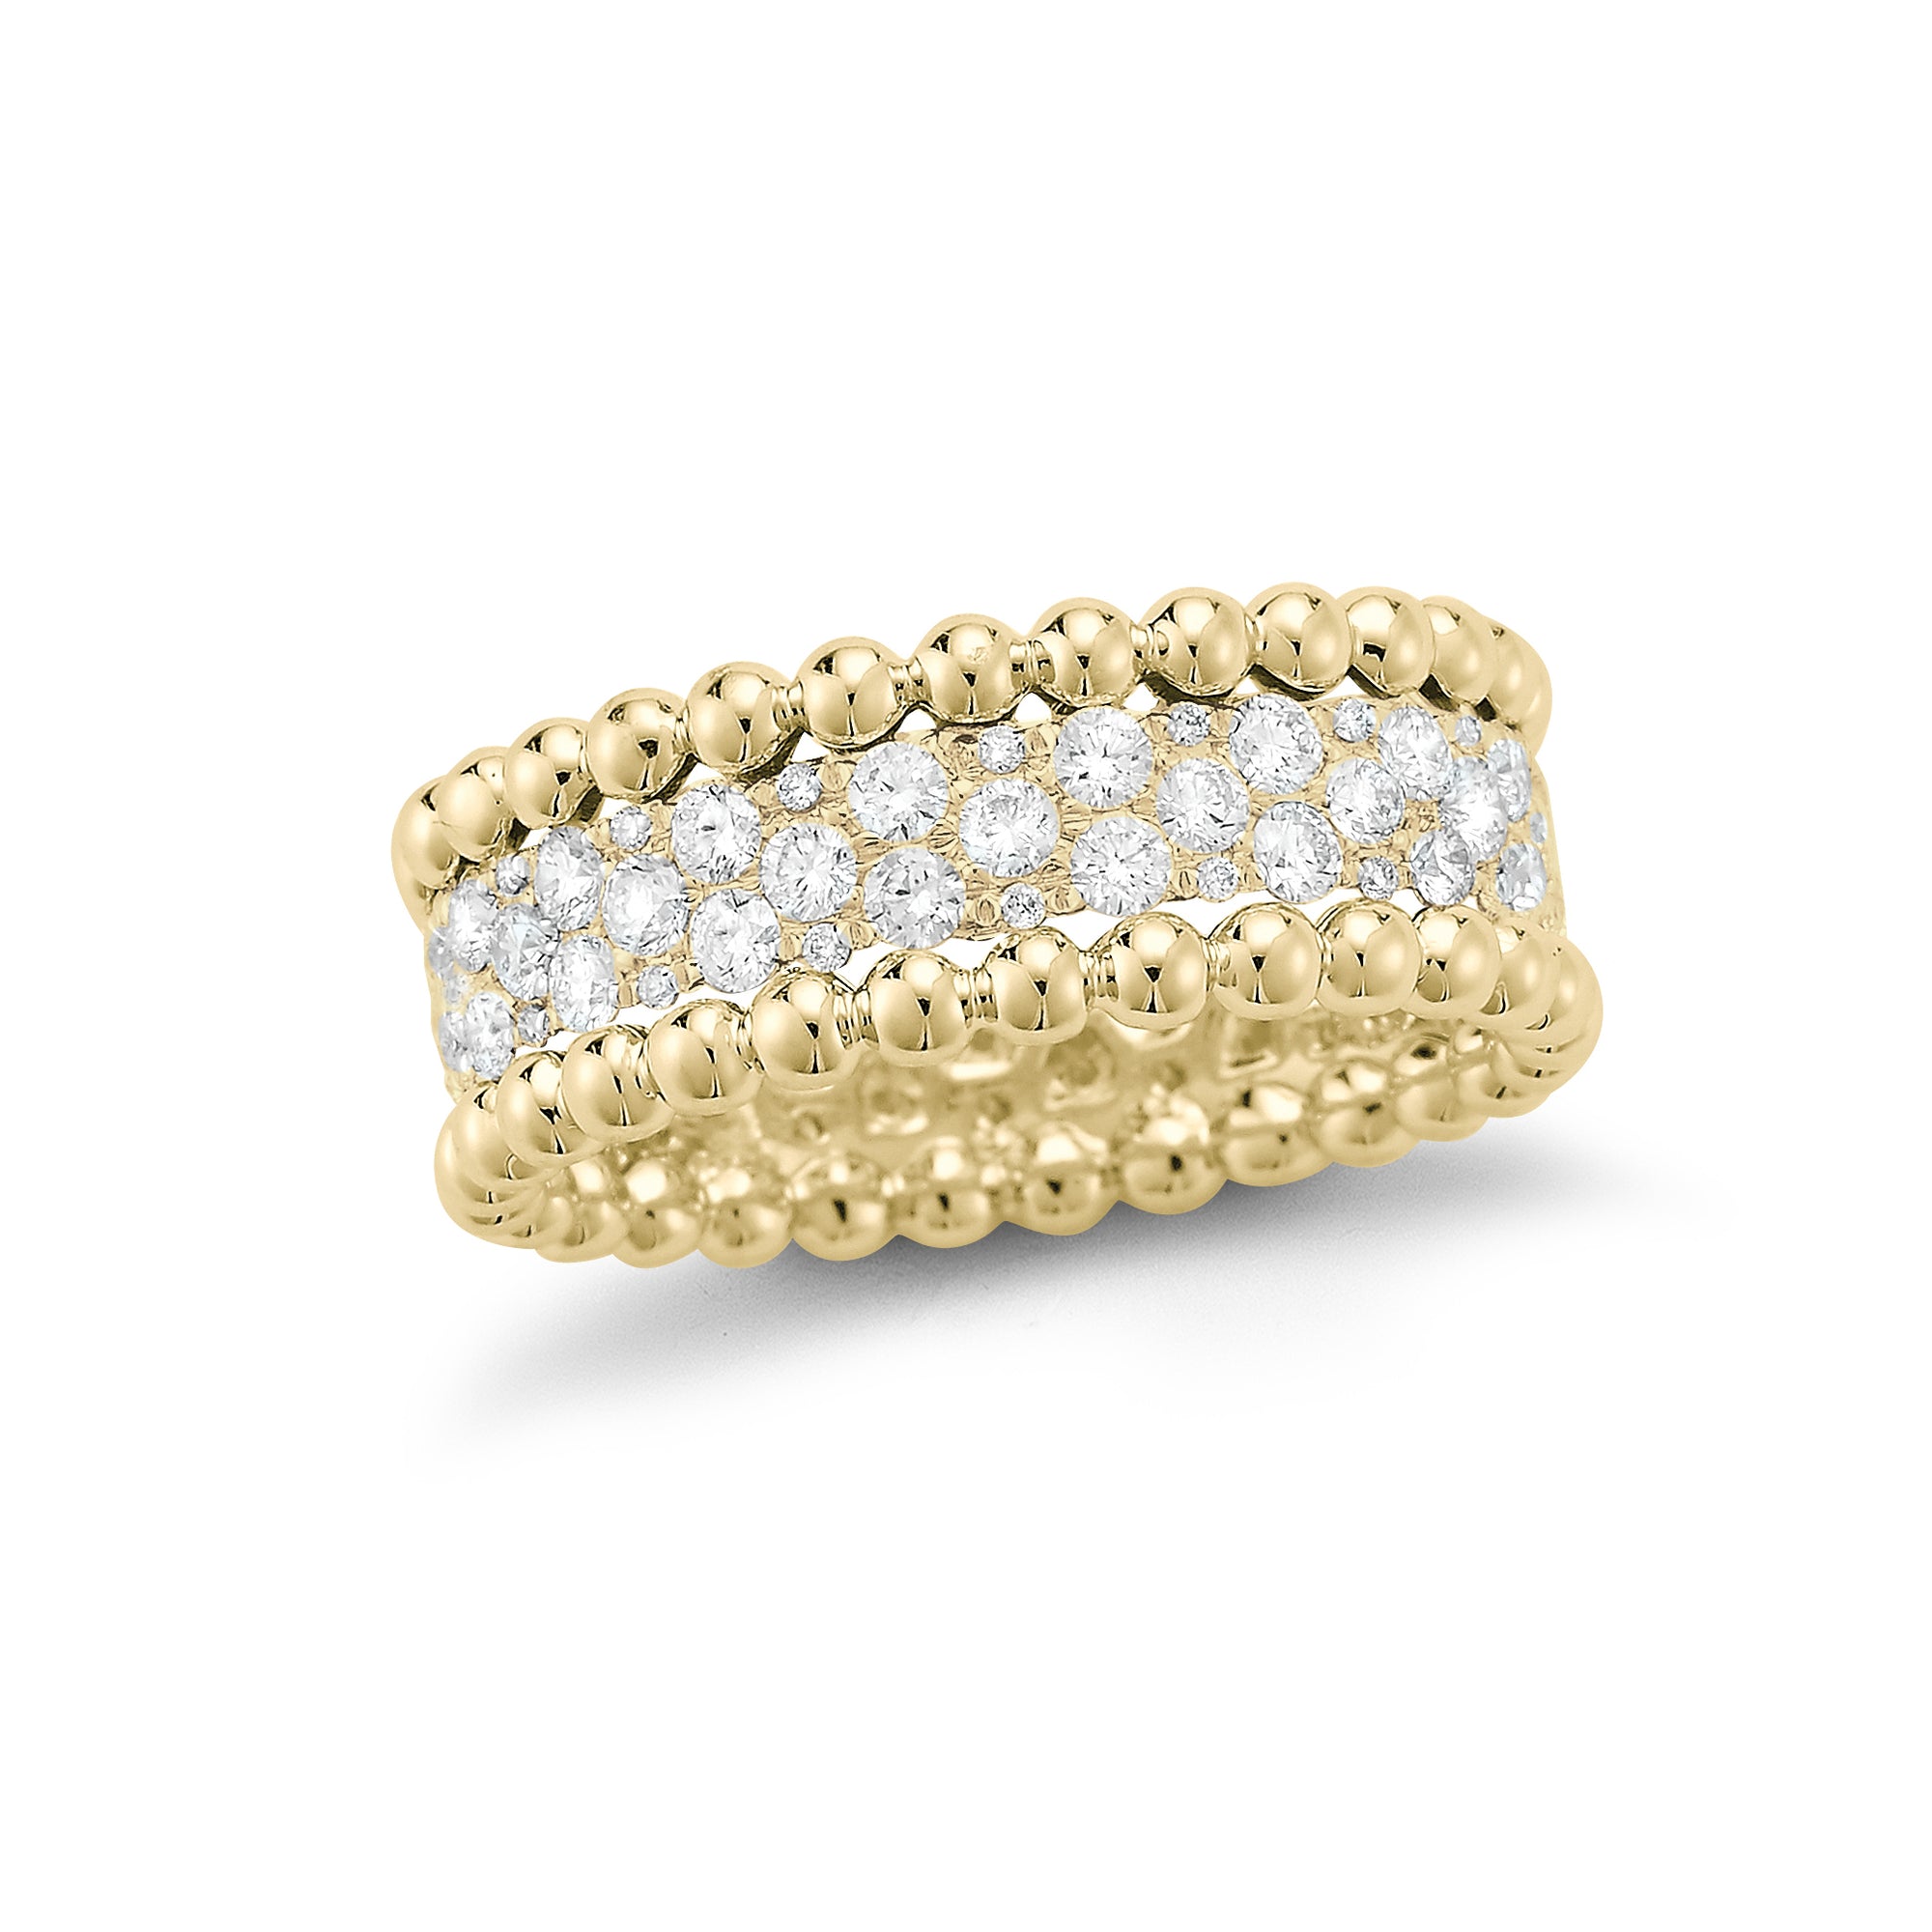 Two-tone Beaded Diamond Ring  18k gold, 5.22 grams, 90 round shared prong-set brilliant diamonds 1.41 carats.